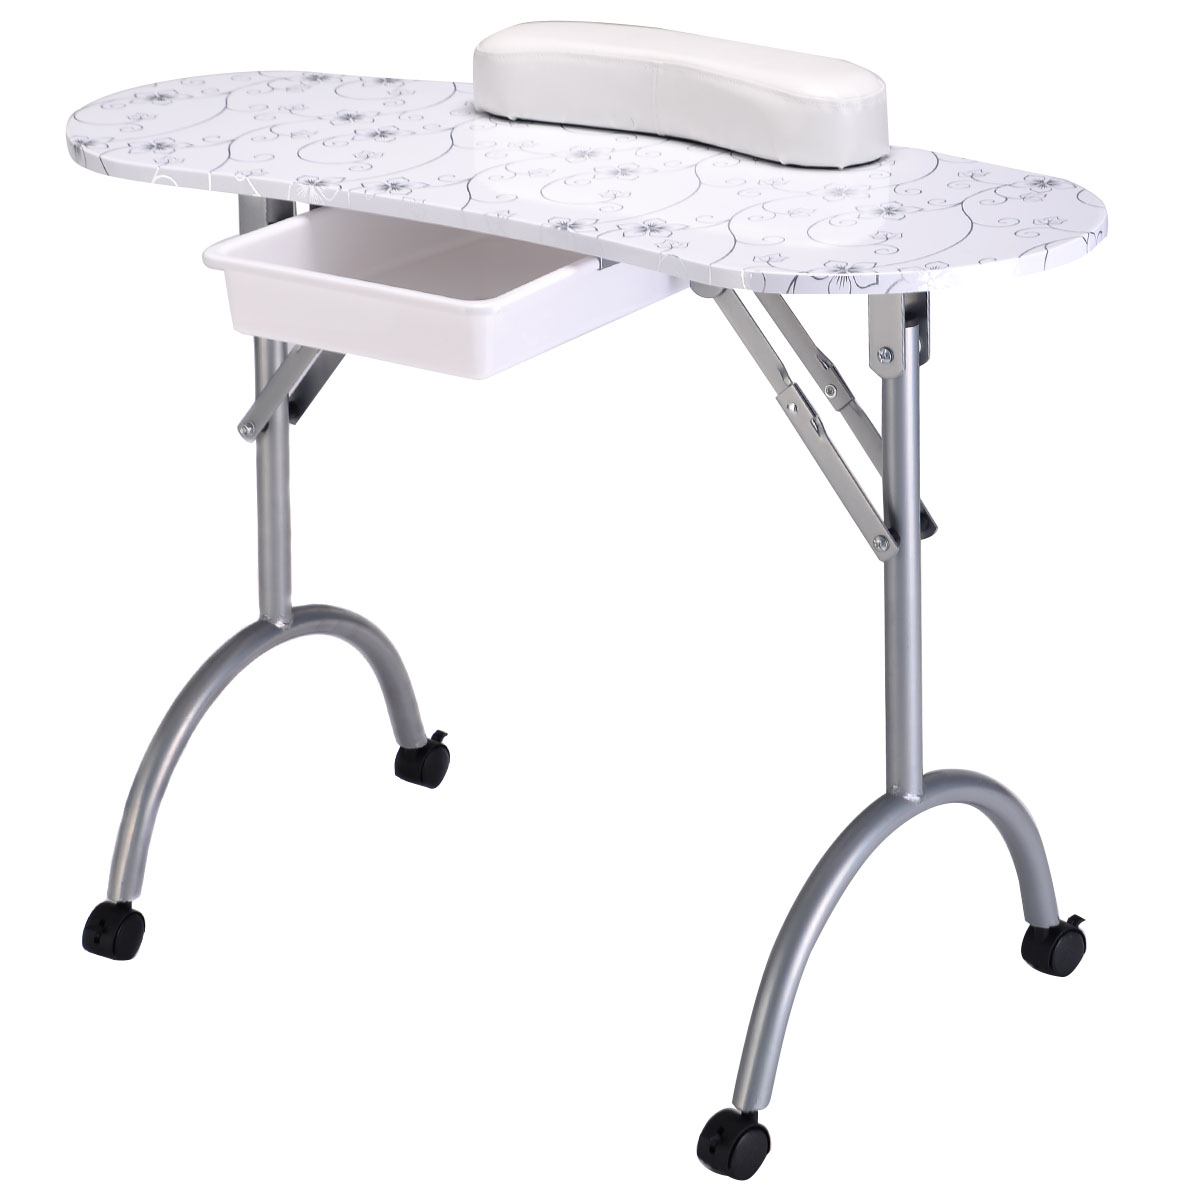 Foldable Portable Manicure Nail Art Salon Table Desk Station Hand Cushion Black MT-017F Black